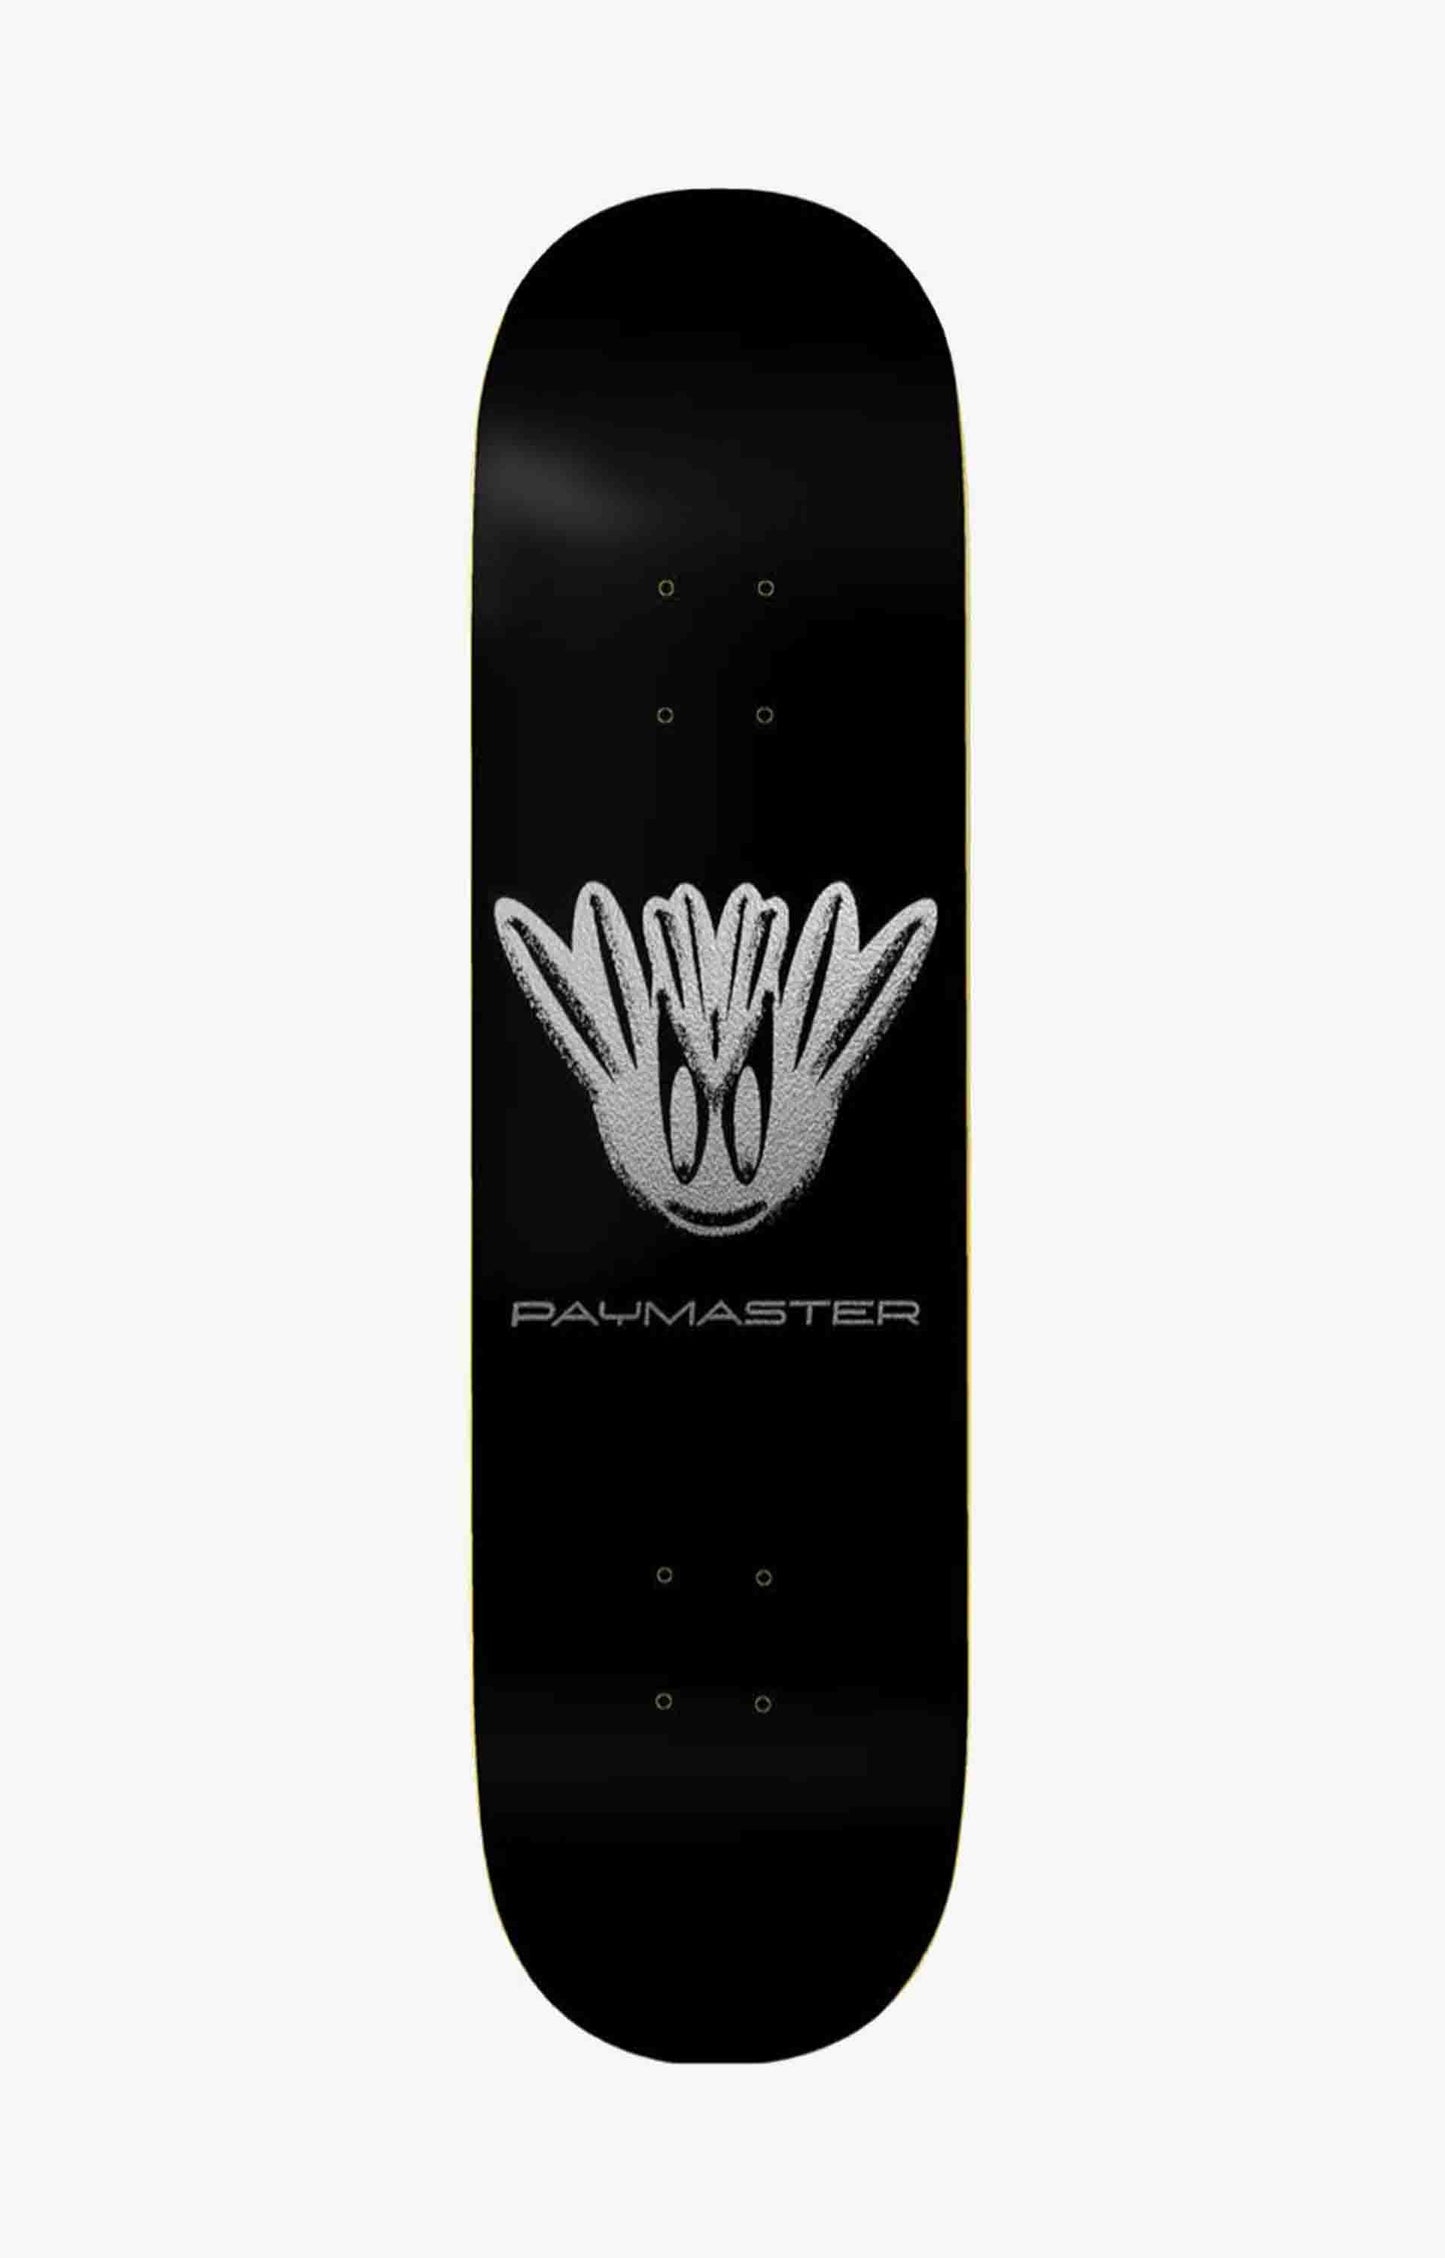 Limosine Paymaster Cyrus Bennet Skateboard Deck, 8.18"